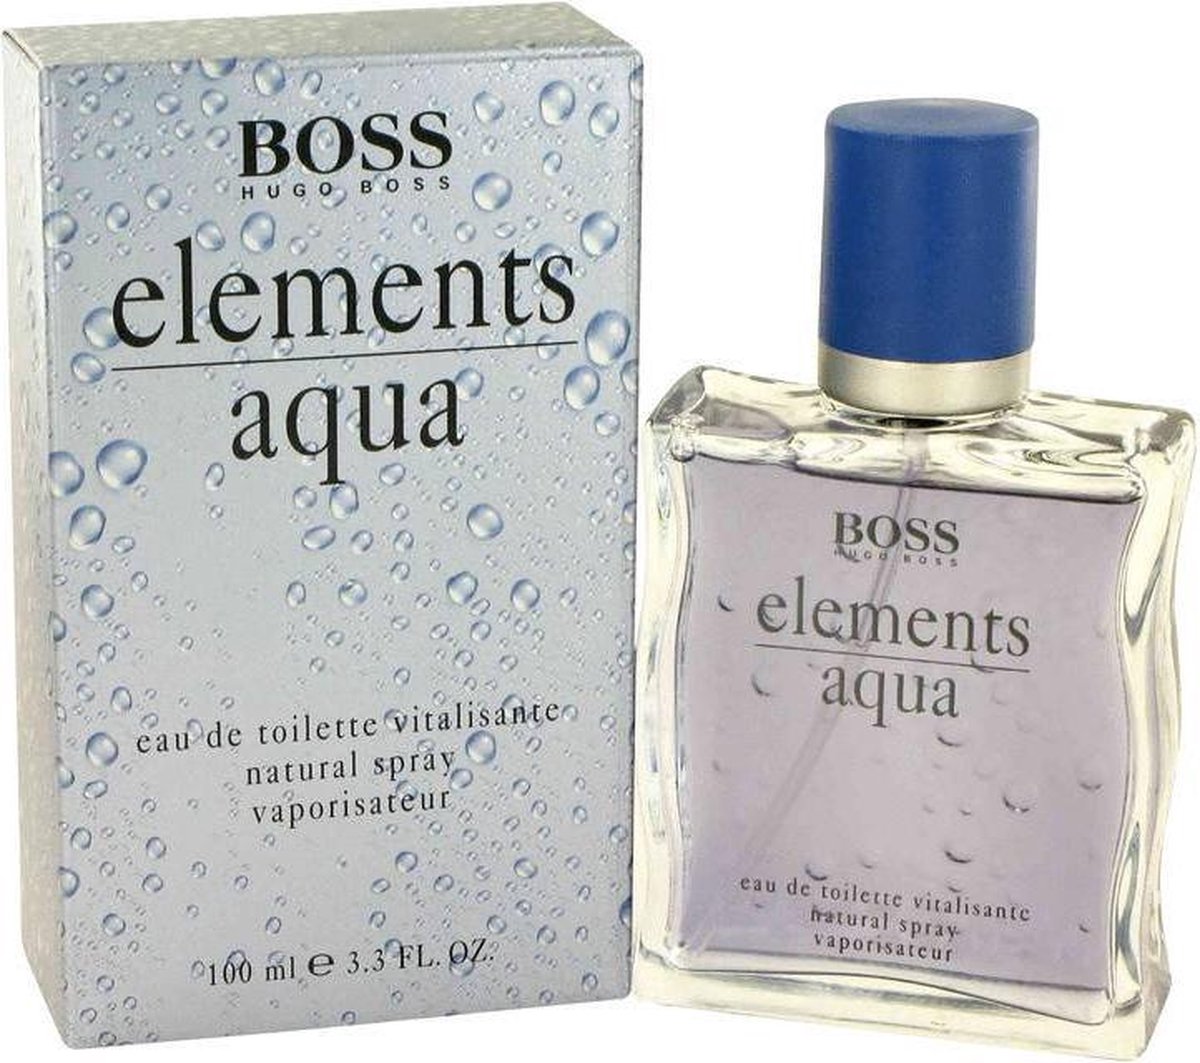 hugo boss boss elements aqua